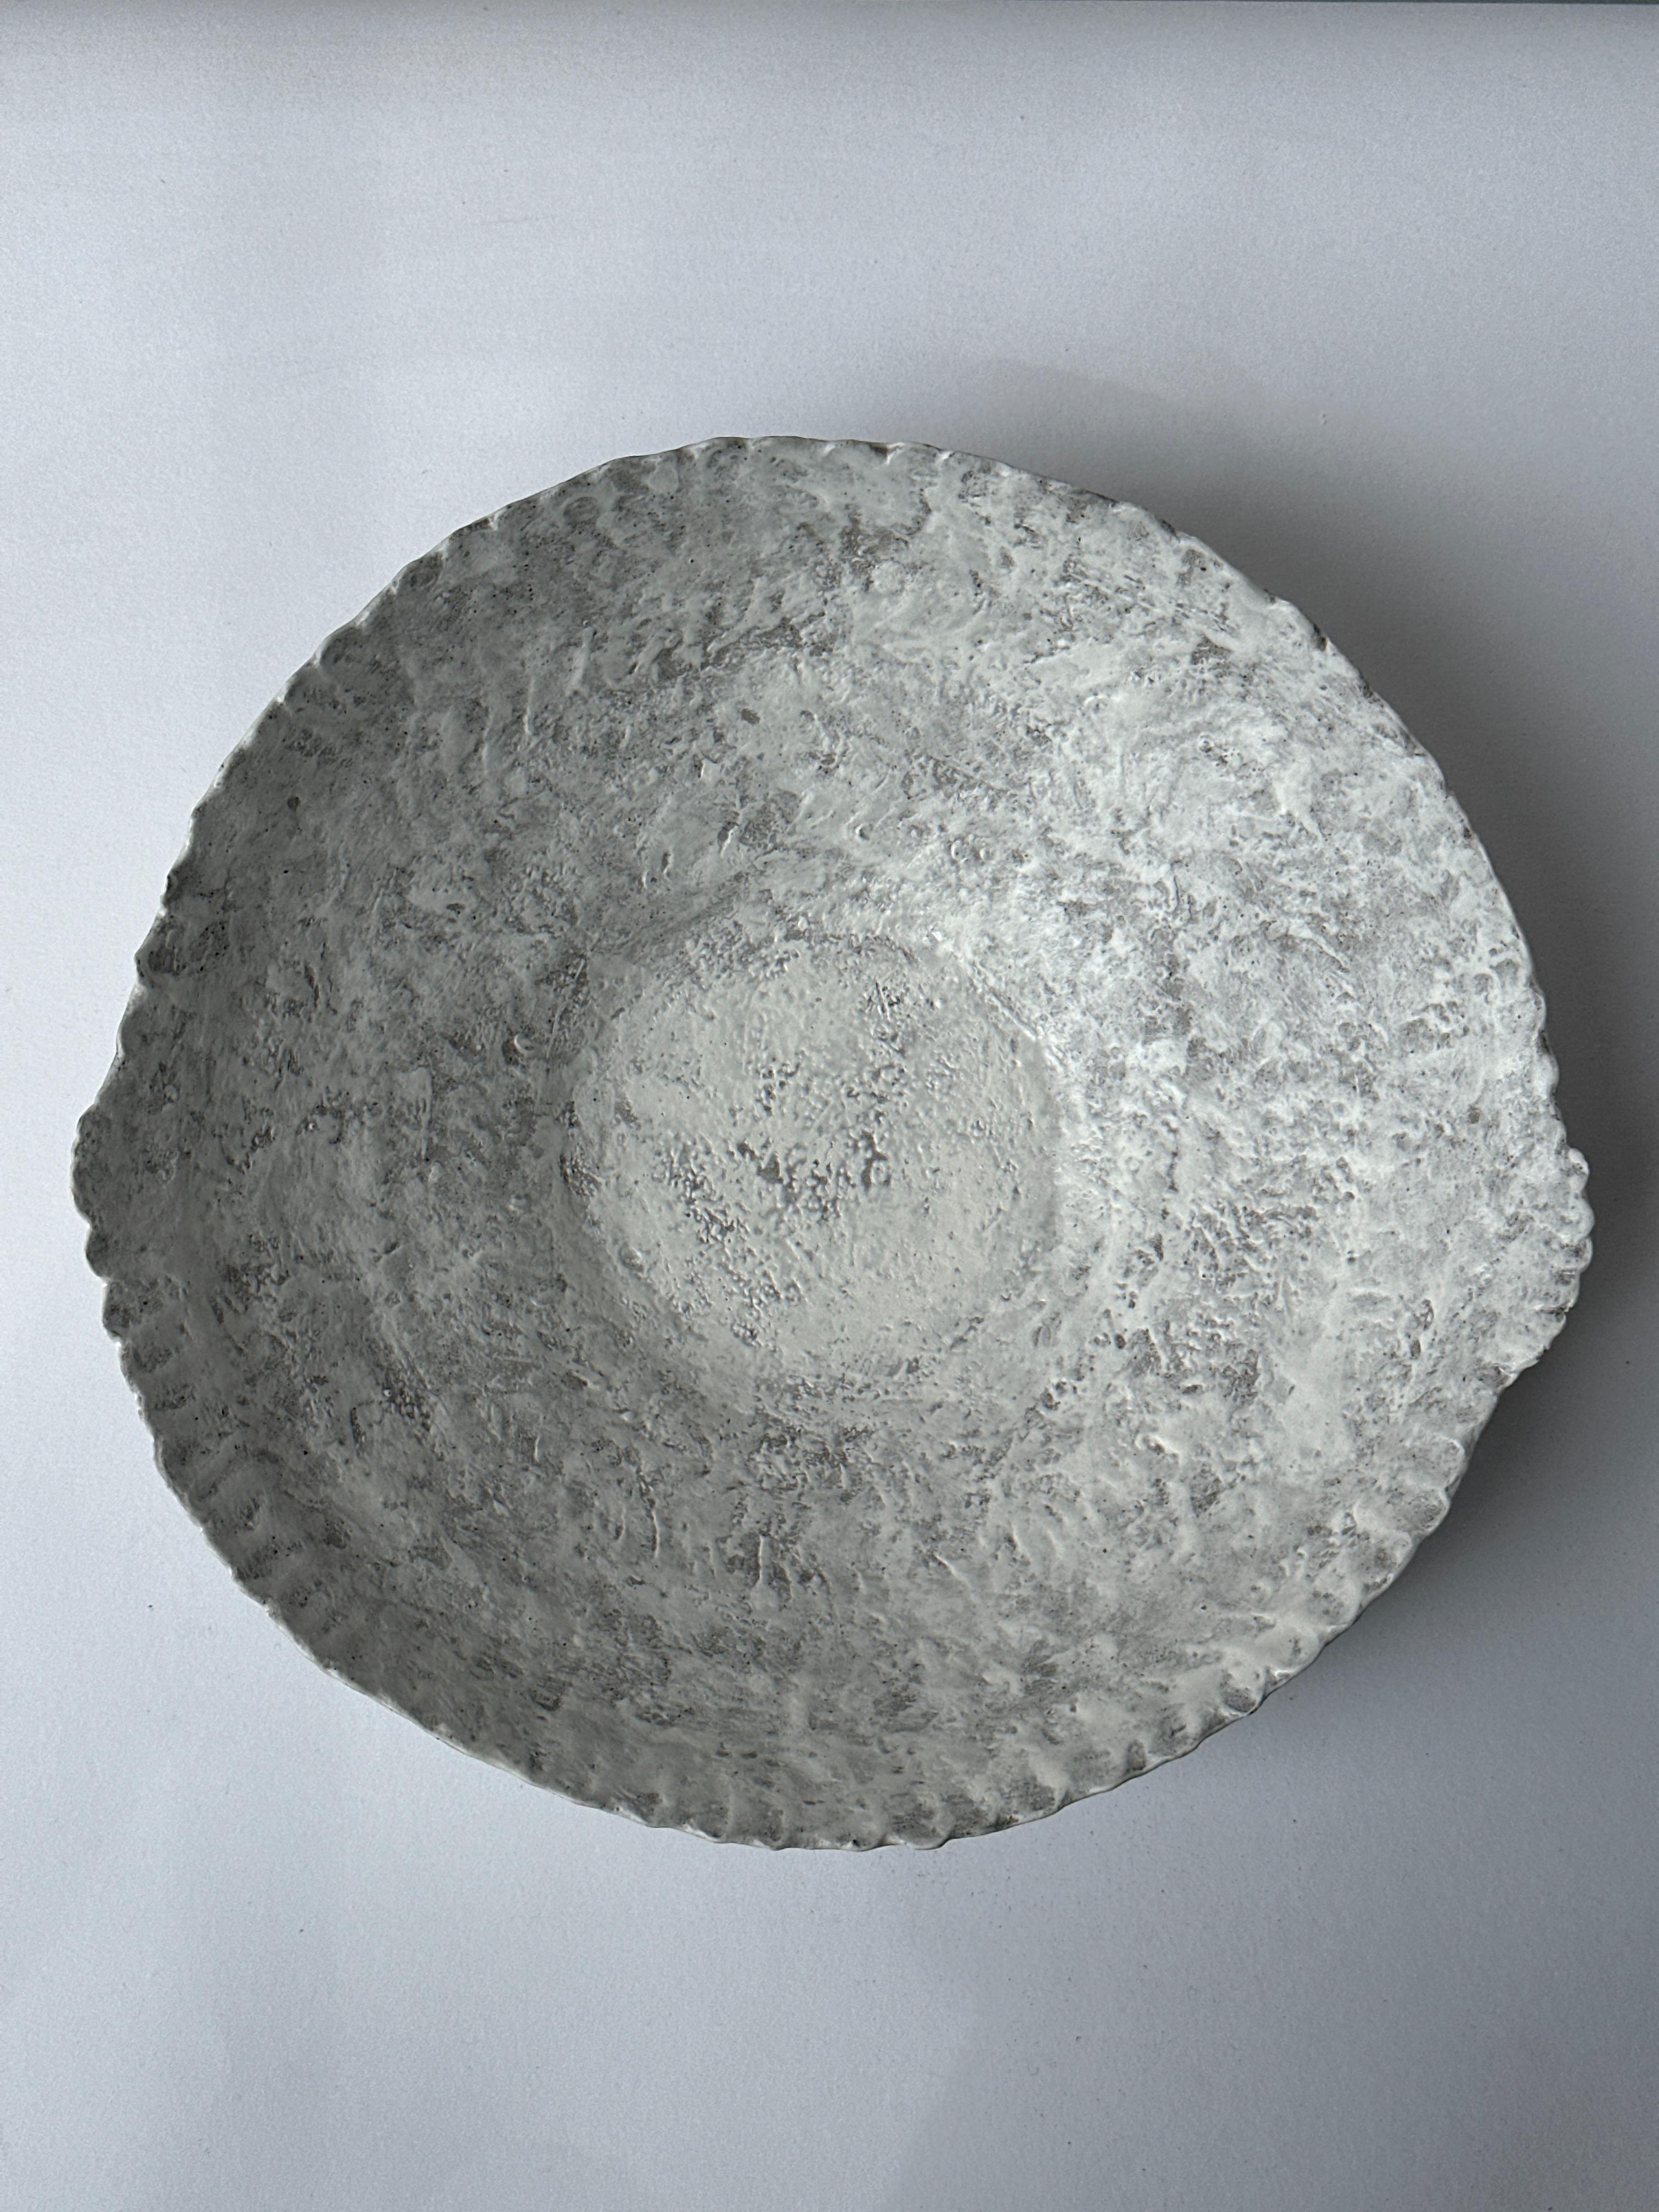 Grey Stoneware Symposio Bowl by Elena Vasilantonaki In New Condition For Sale In Geneve, CH